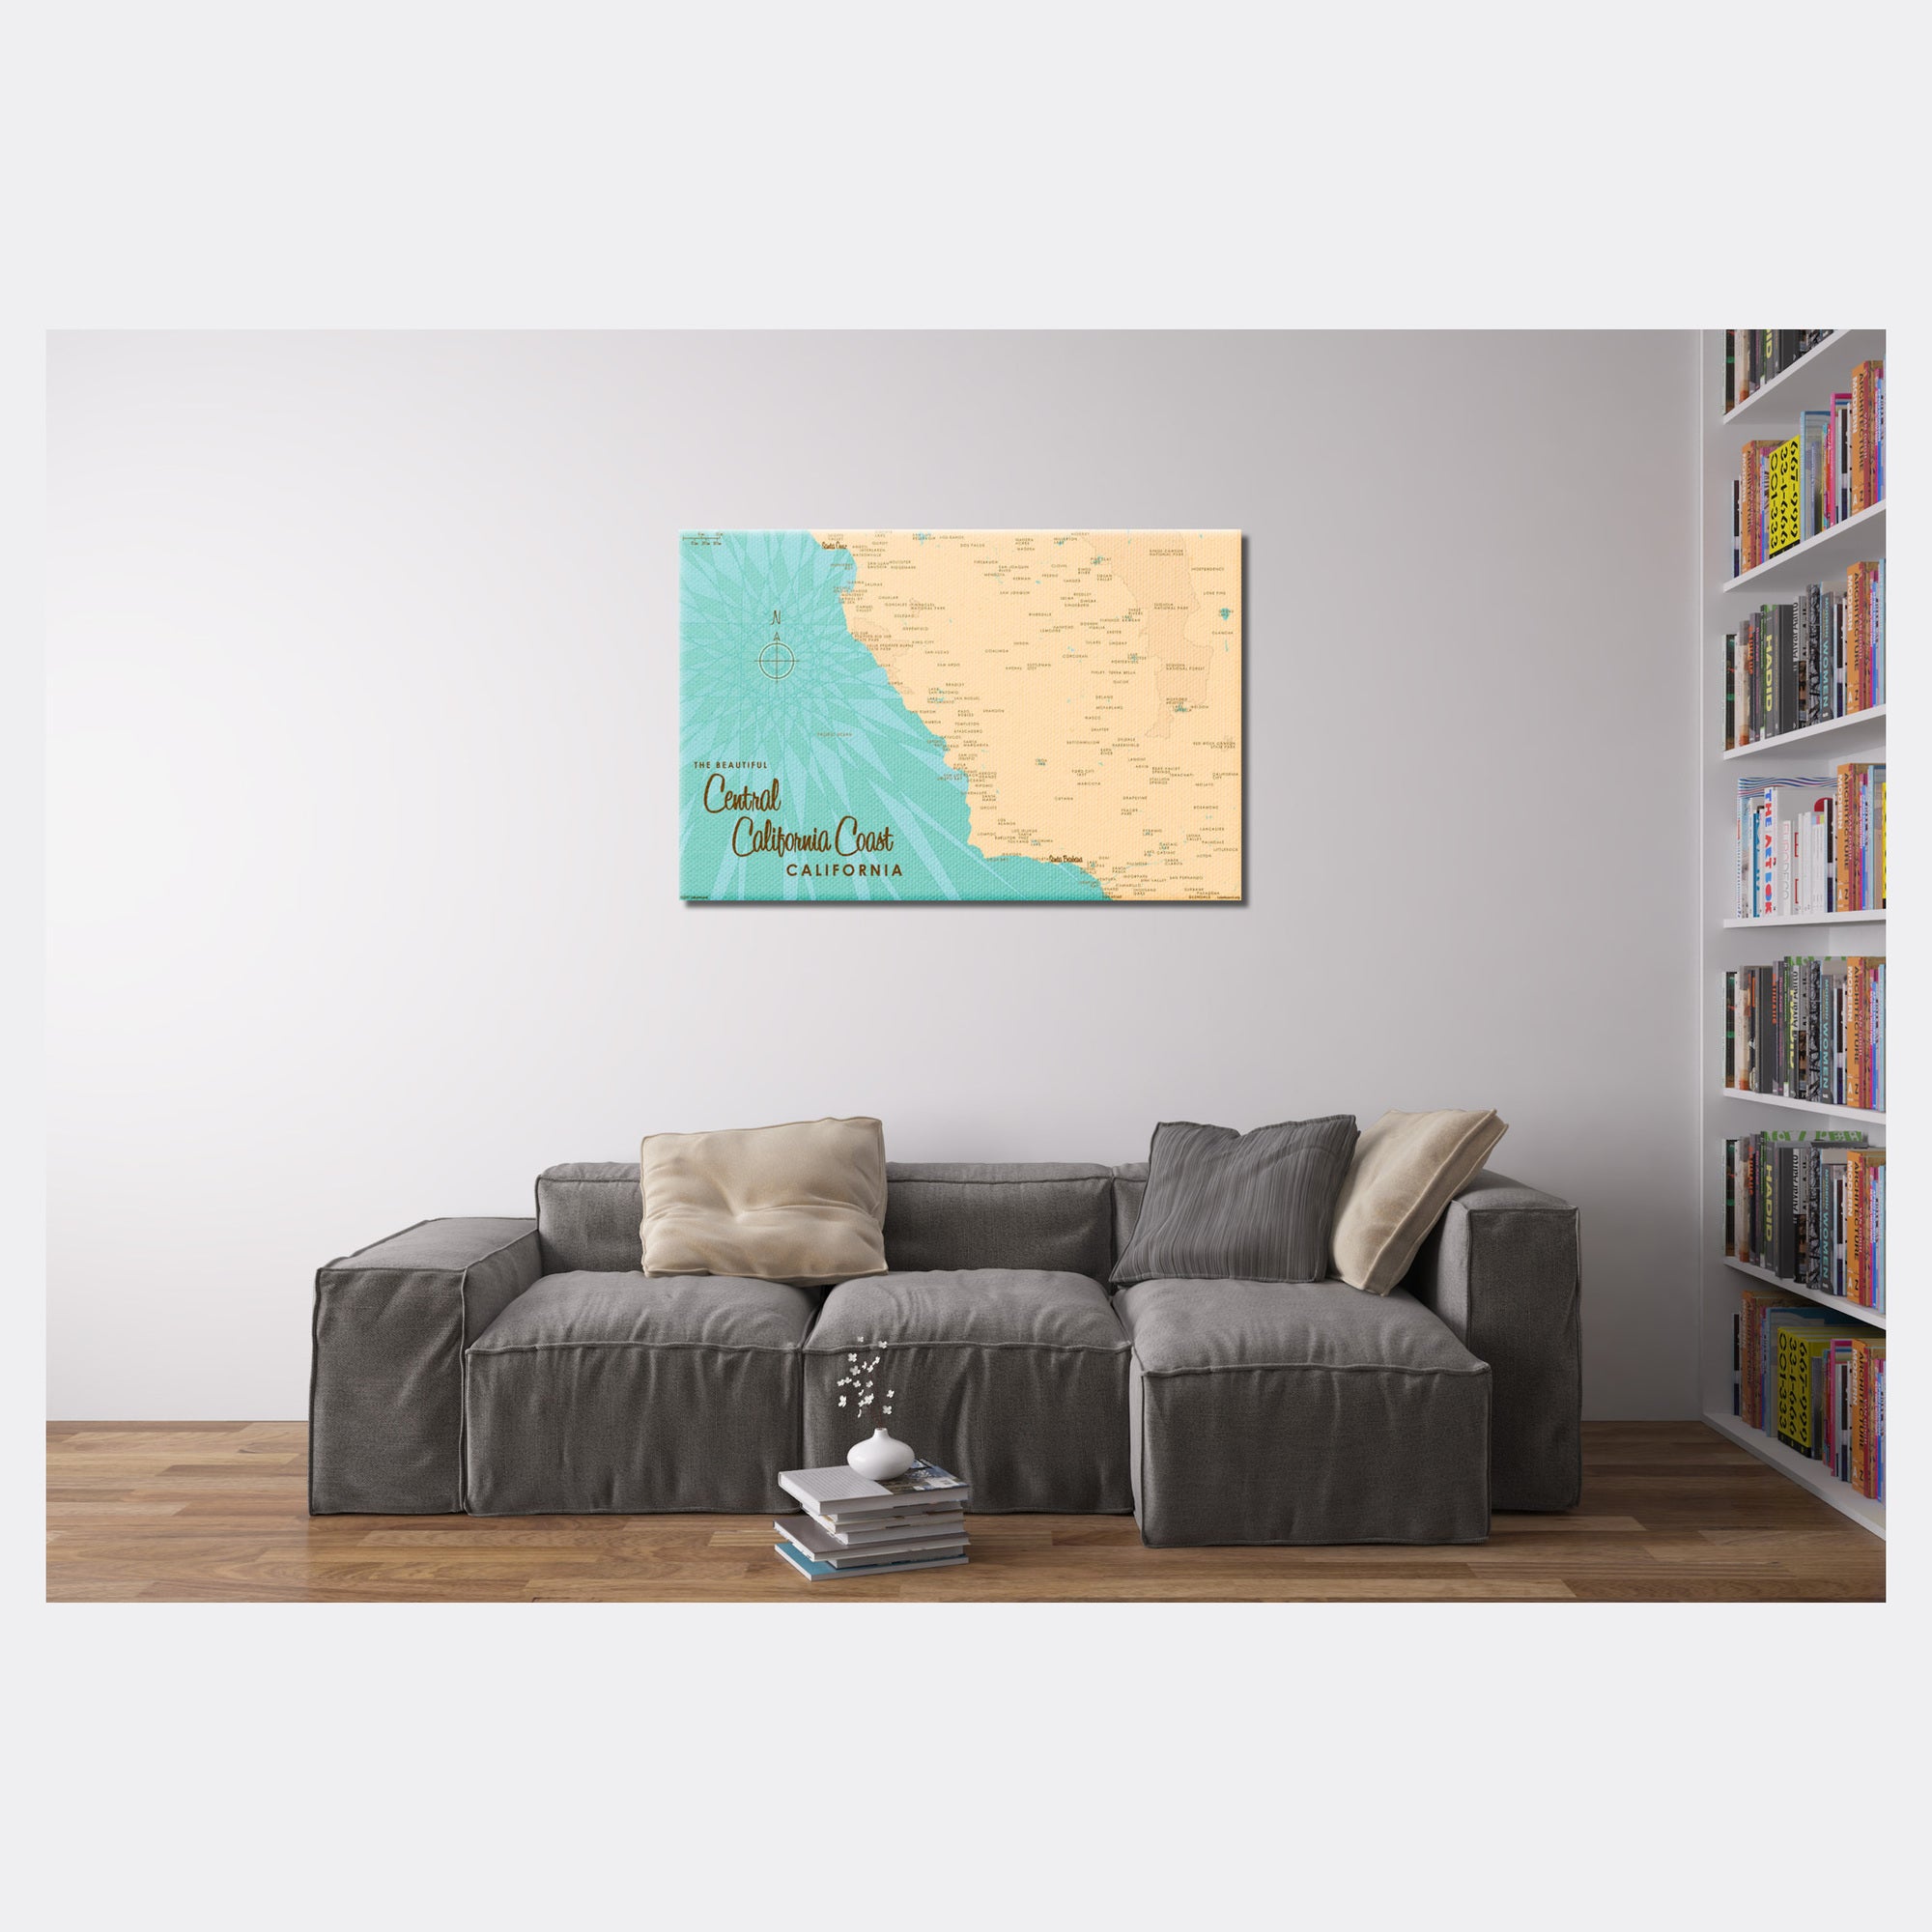 Central California Coast, Canvas Print